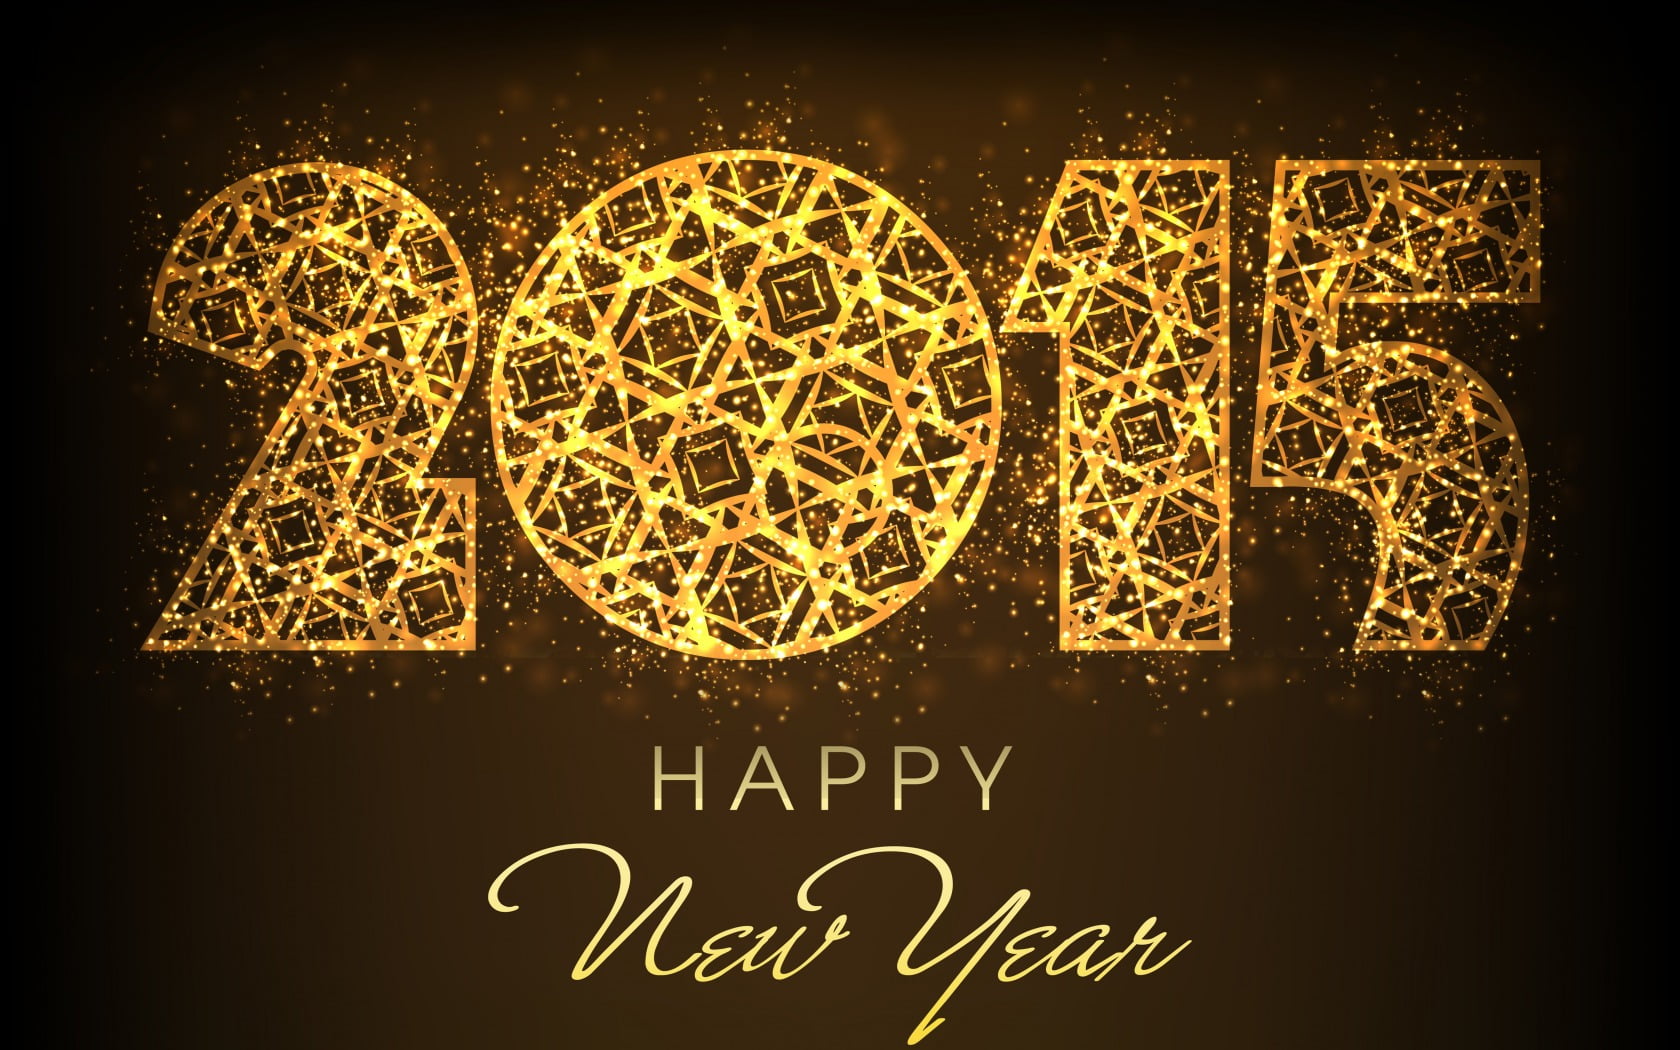 Golden Happy New Year 2015, 2015 happy new year text overlay